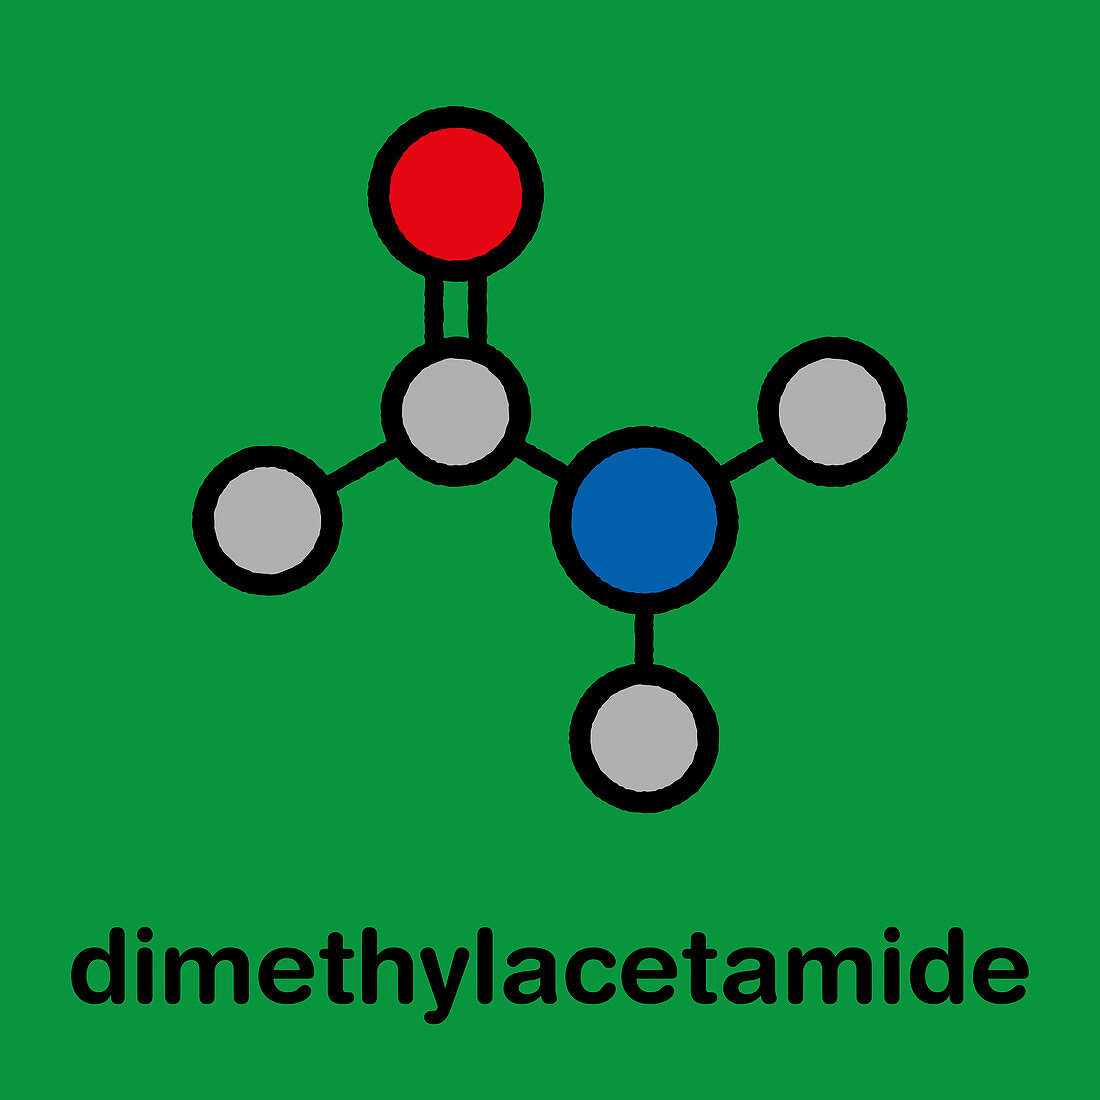 Dimethylacetamide chemical solvent molecule